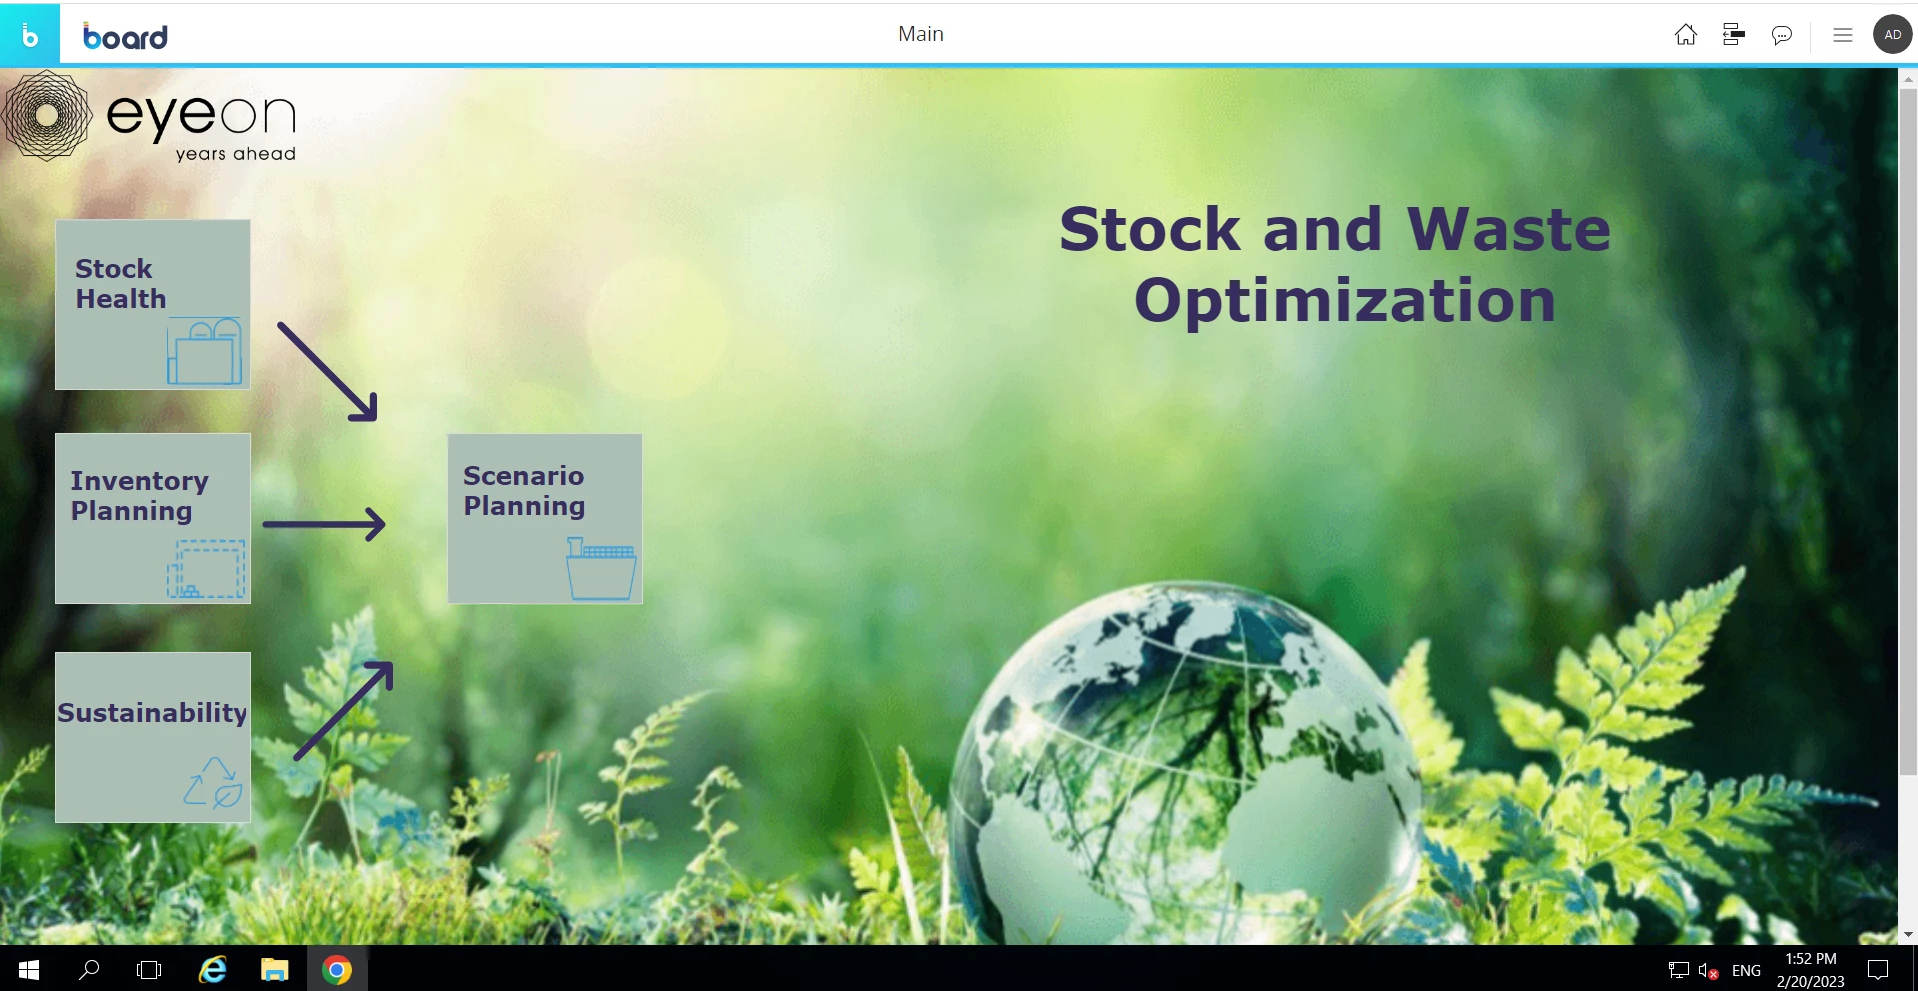 Stock and Waste Optimization according to Sustainability Goals Image 1